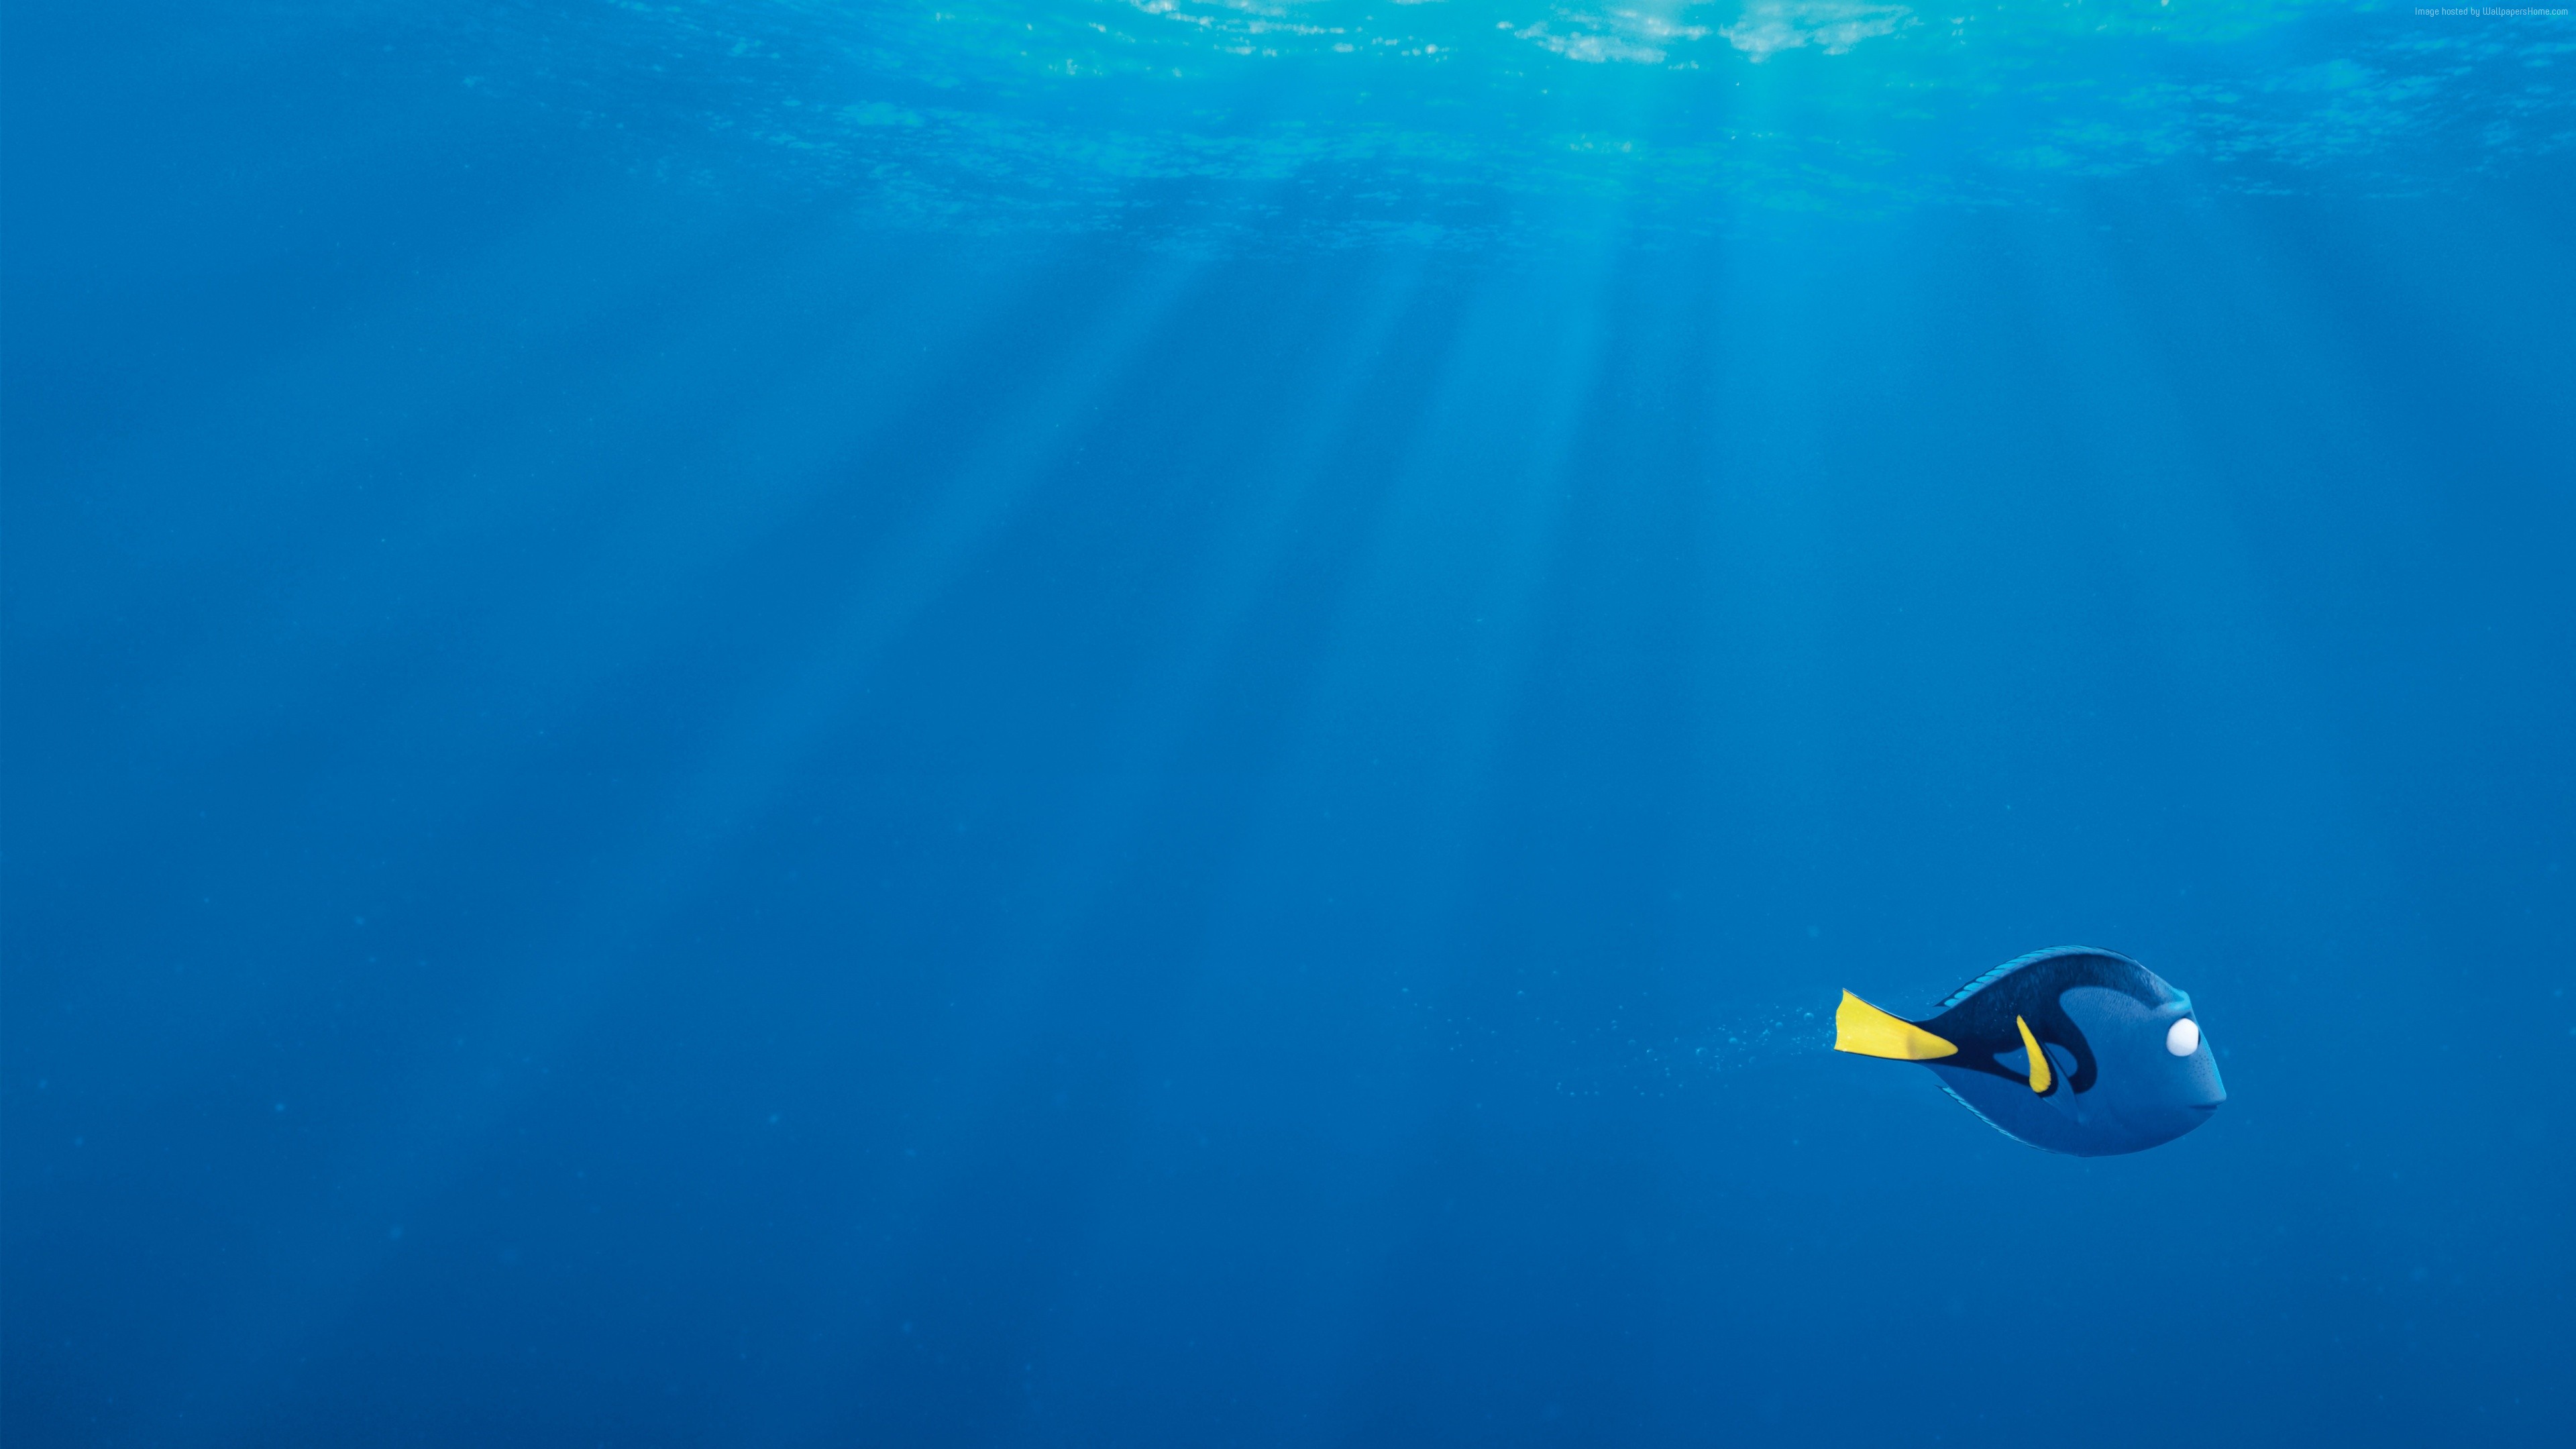 Wallpaper Finding Dory Nemo Shark Fish Pixar